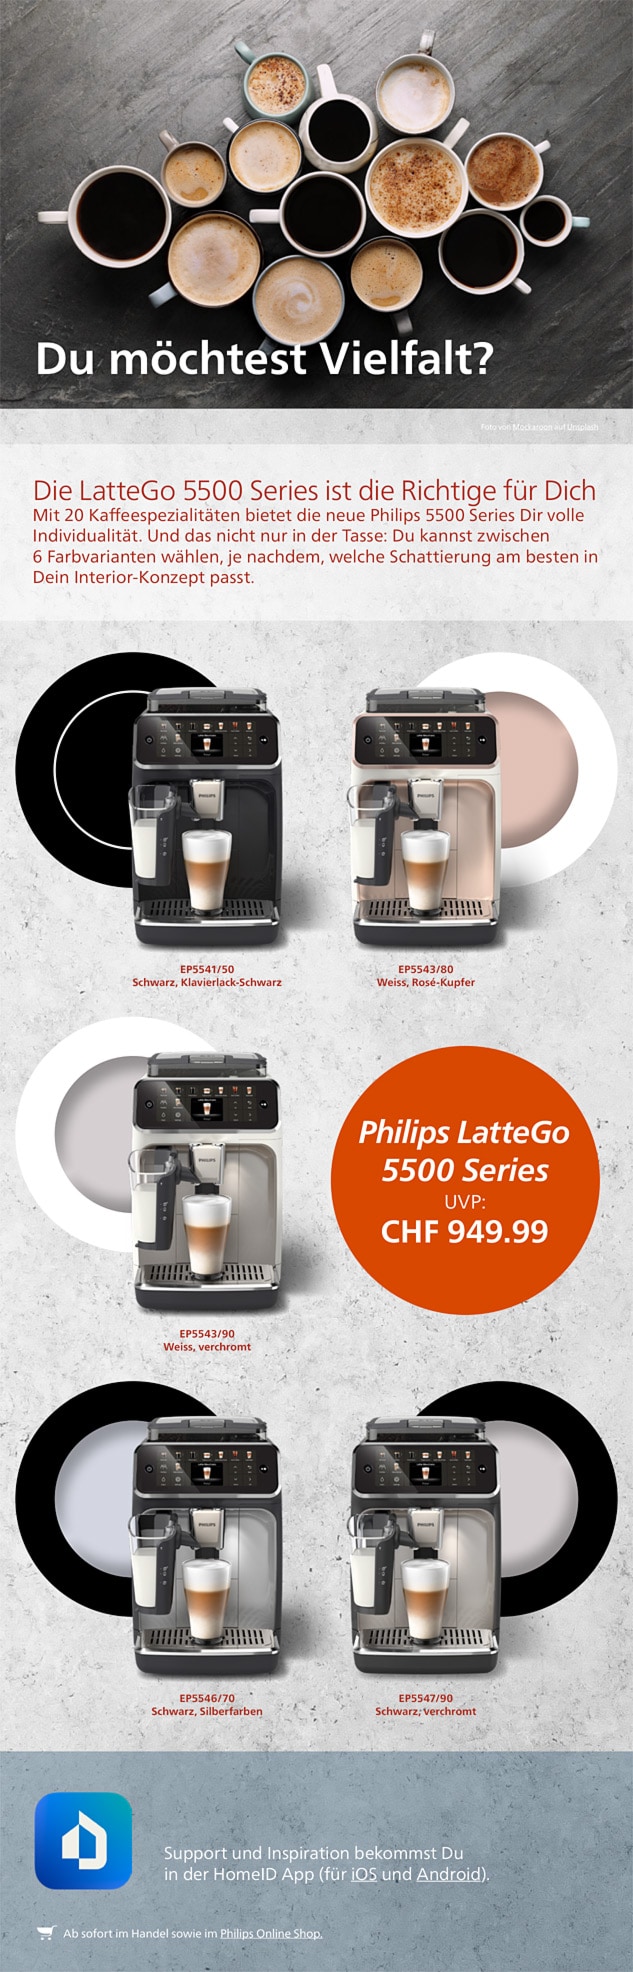 Themensheet Philips LatteGo 5500 Series